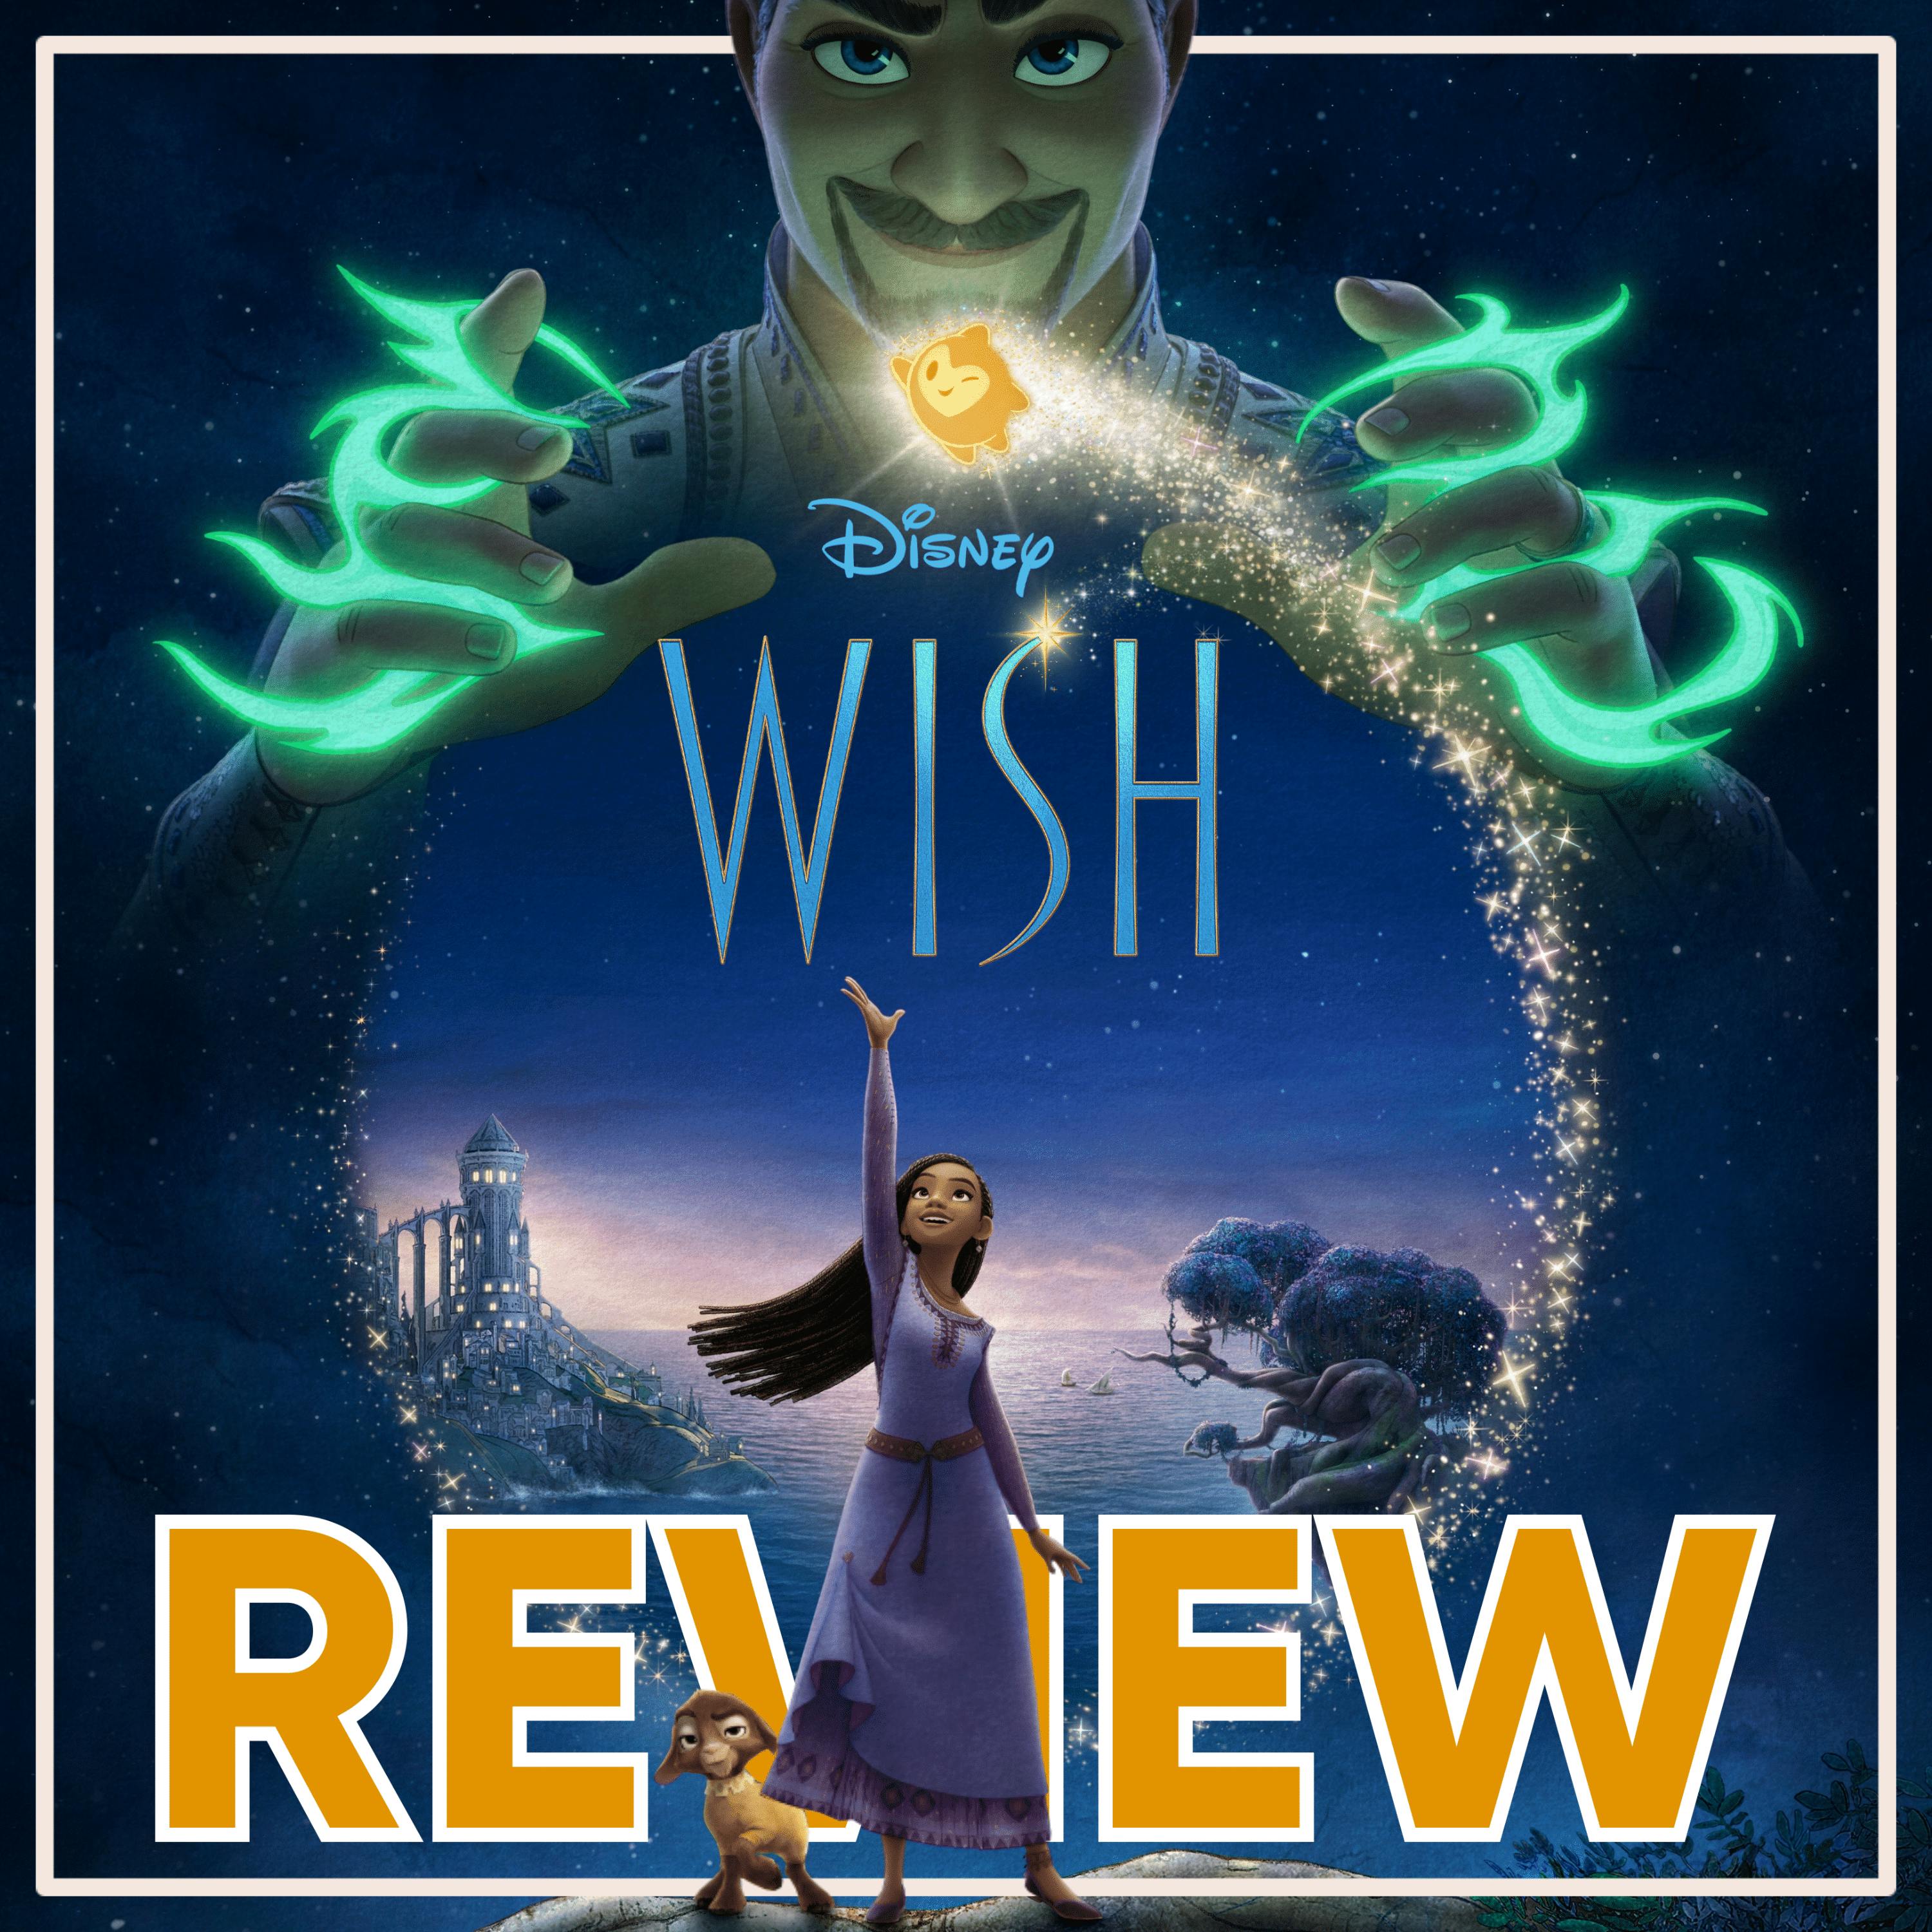 Disney’s Wish Movie Review